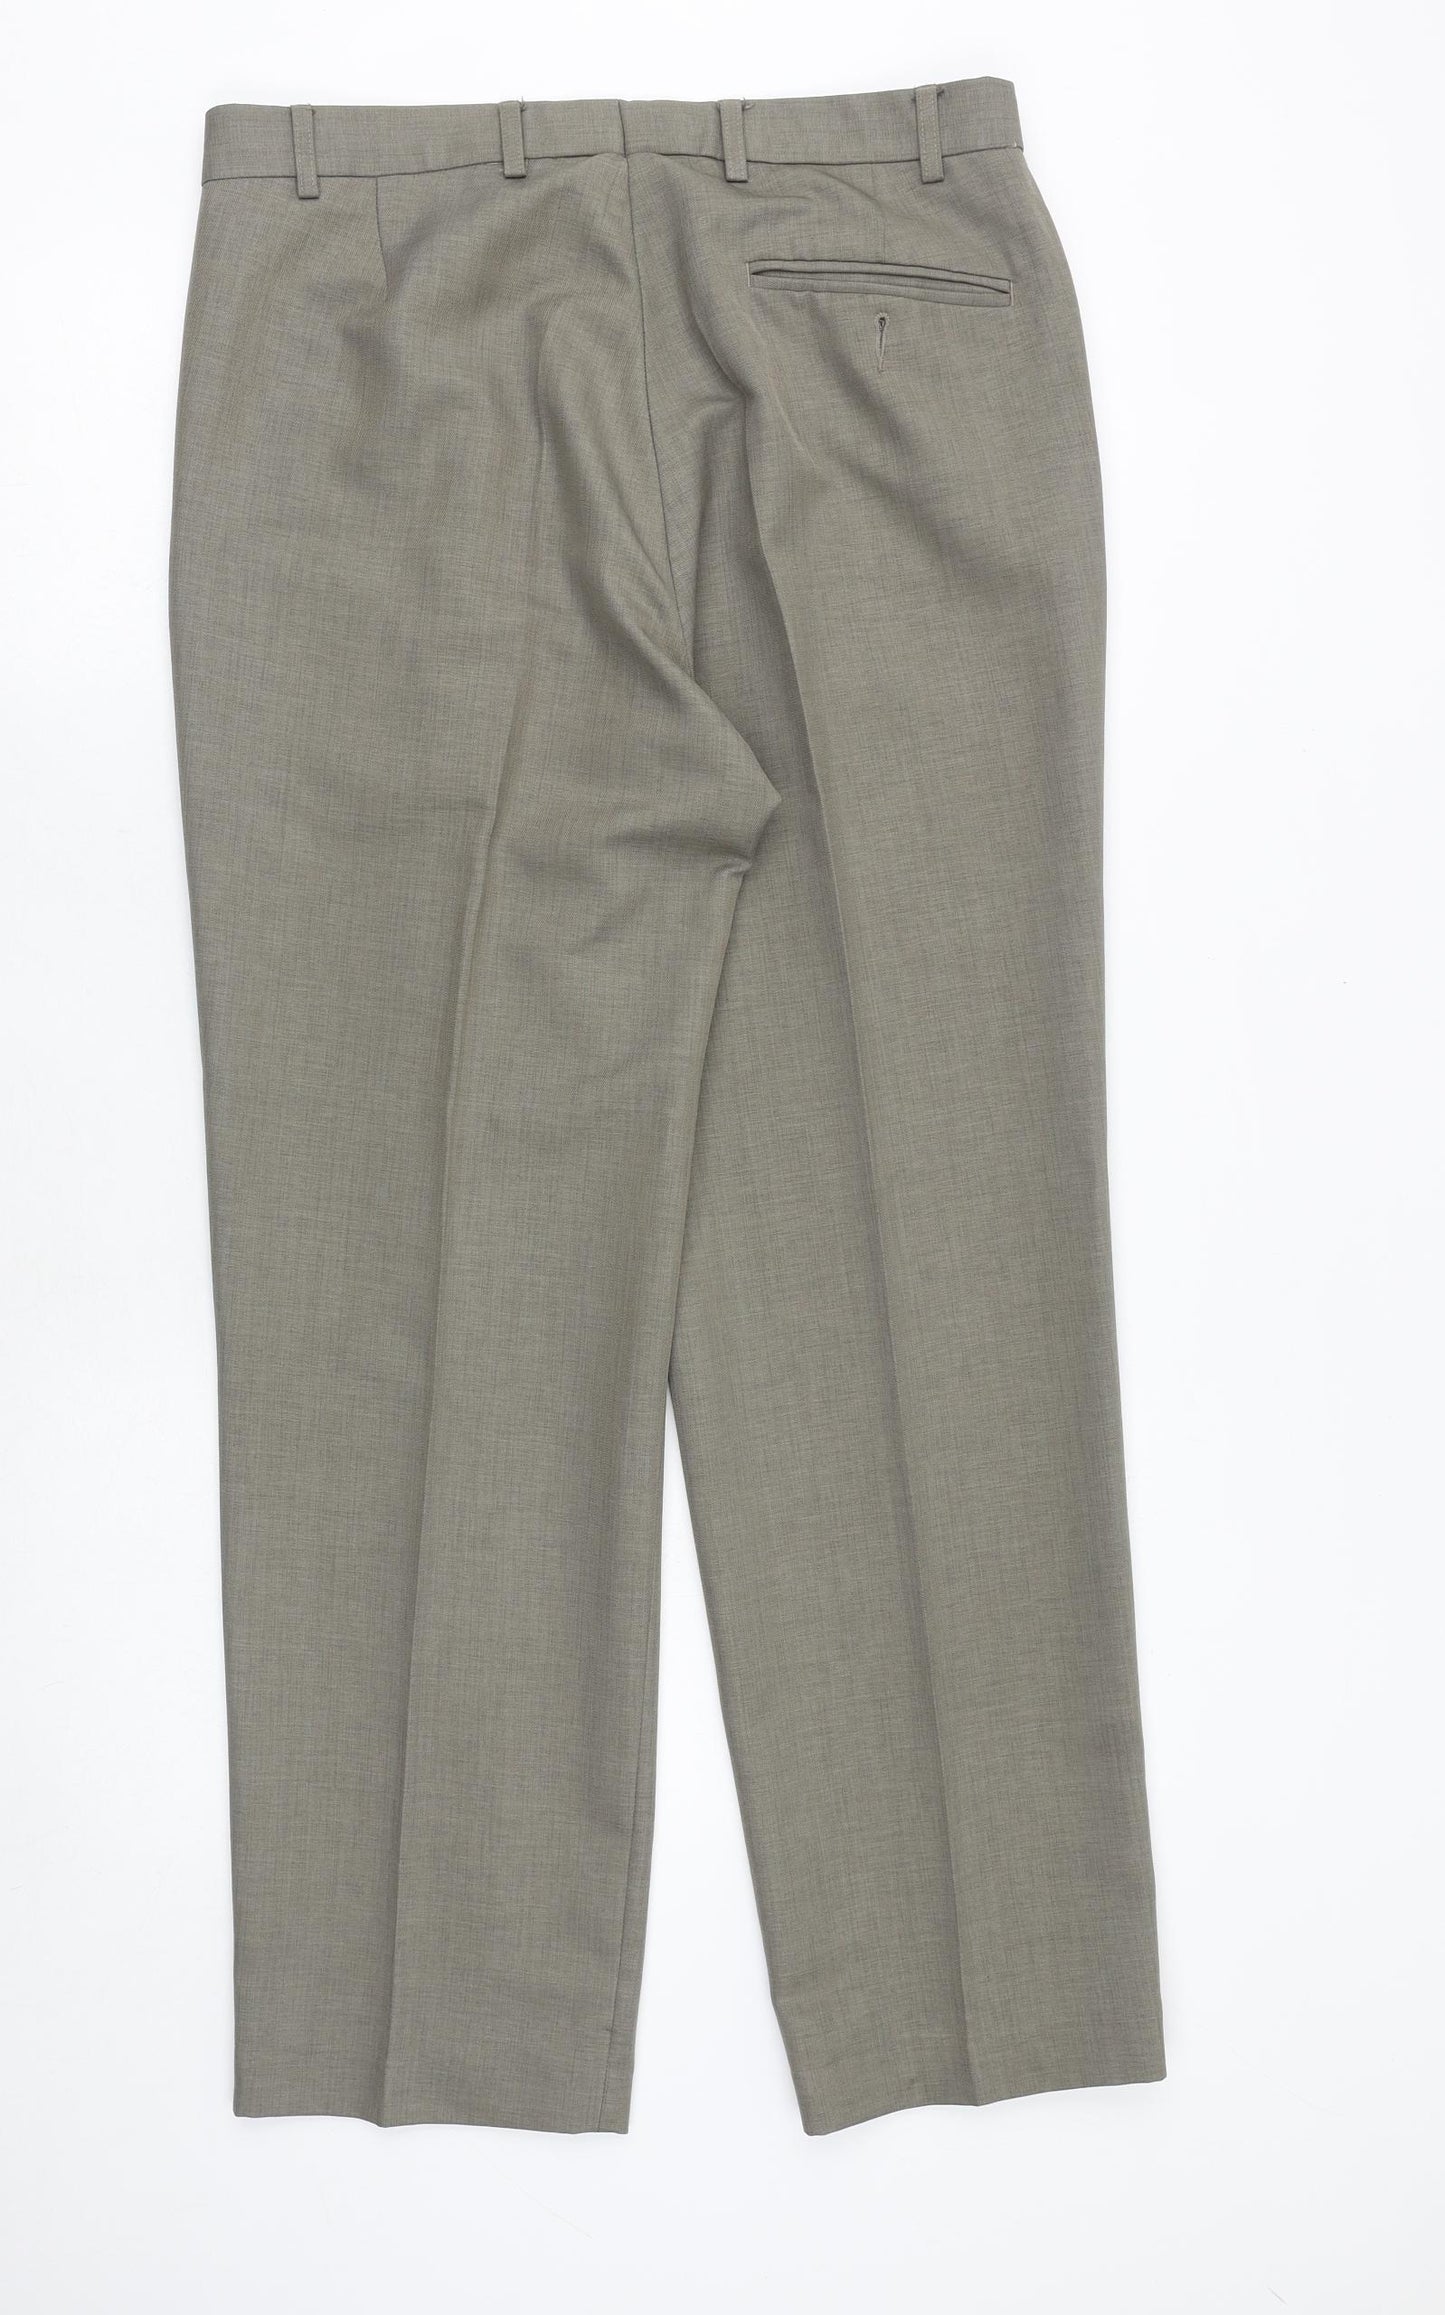 Wolsey Mens Beige Polyester Dress Pants Trousers Size 34 in Regular Zip